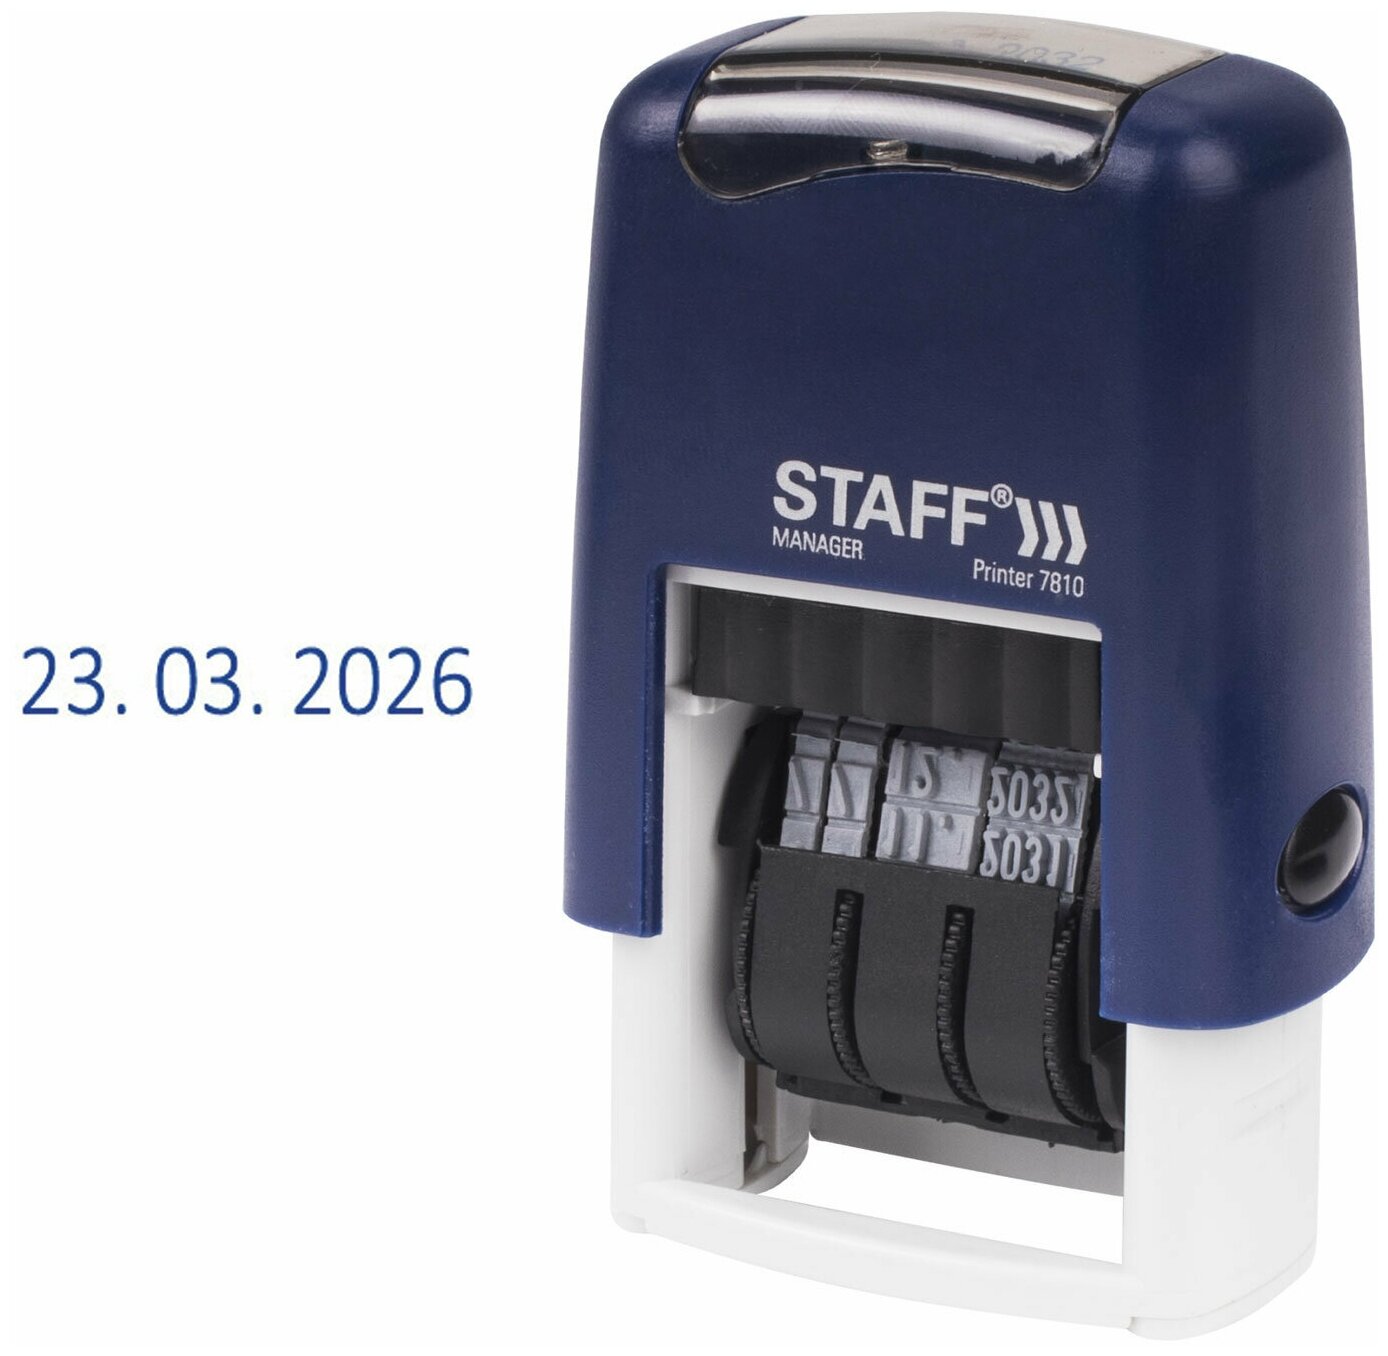 Датер-мини STAFF месяц цифрами оттиск 22х4 мм "Printer 7810 BANK"